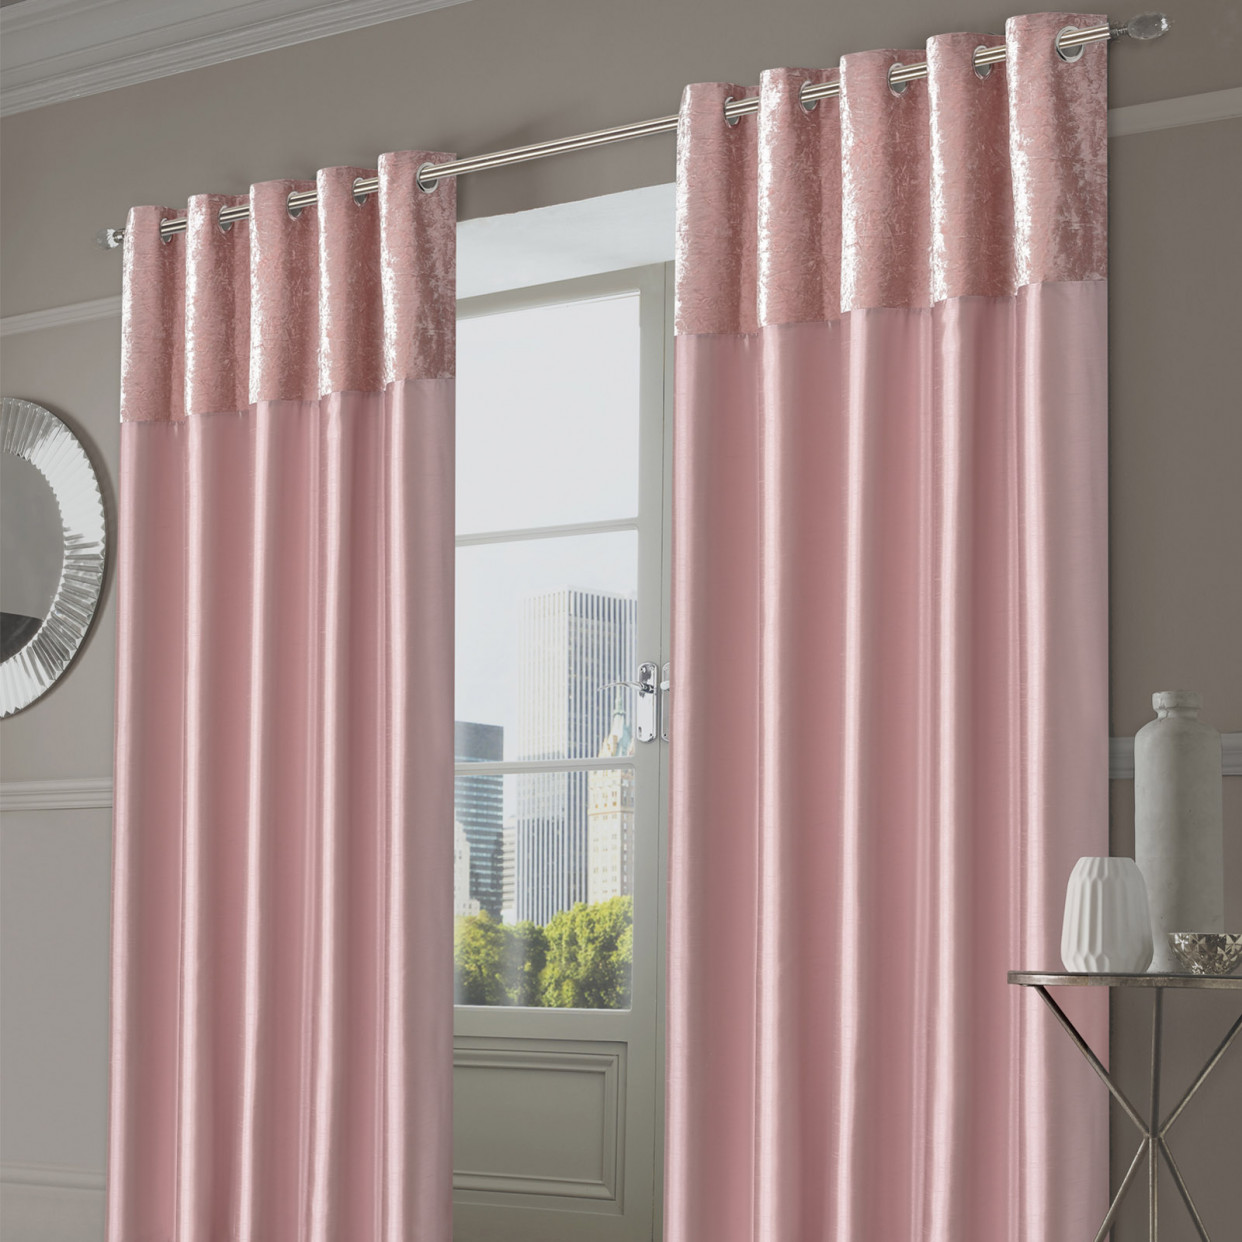 Sienna Home Manhattan Crushed Velvet Band Eyelet Curtains - Blush Pink, 46" x 90">